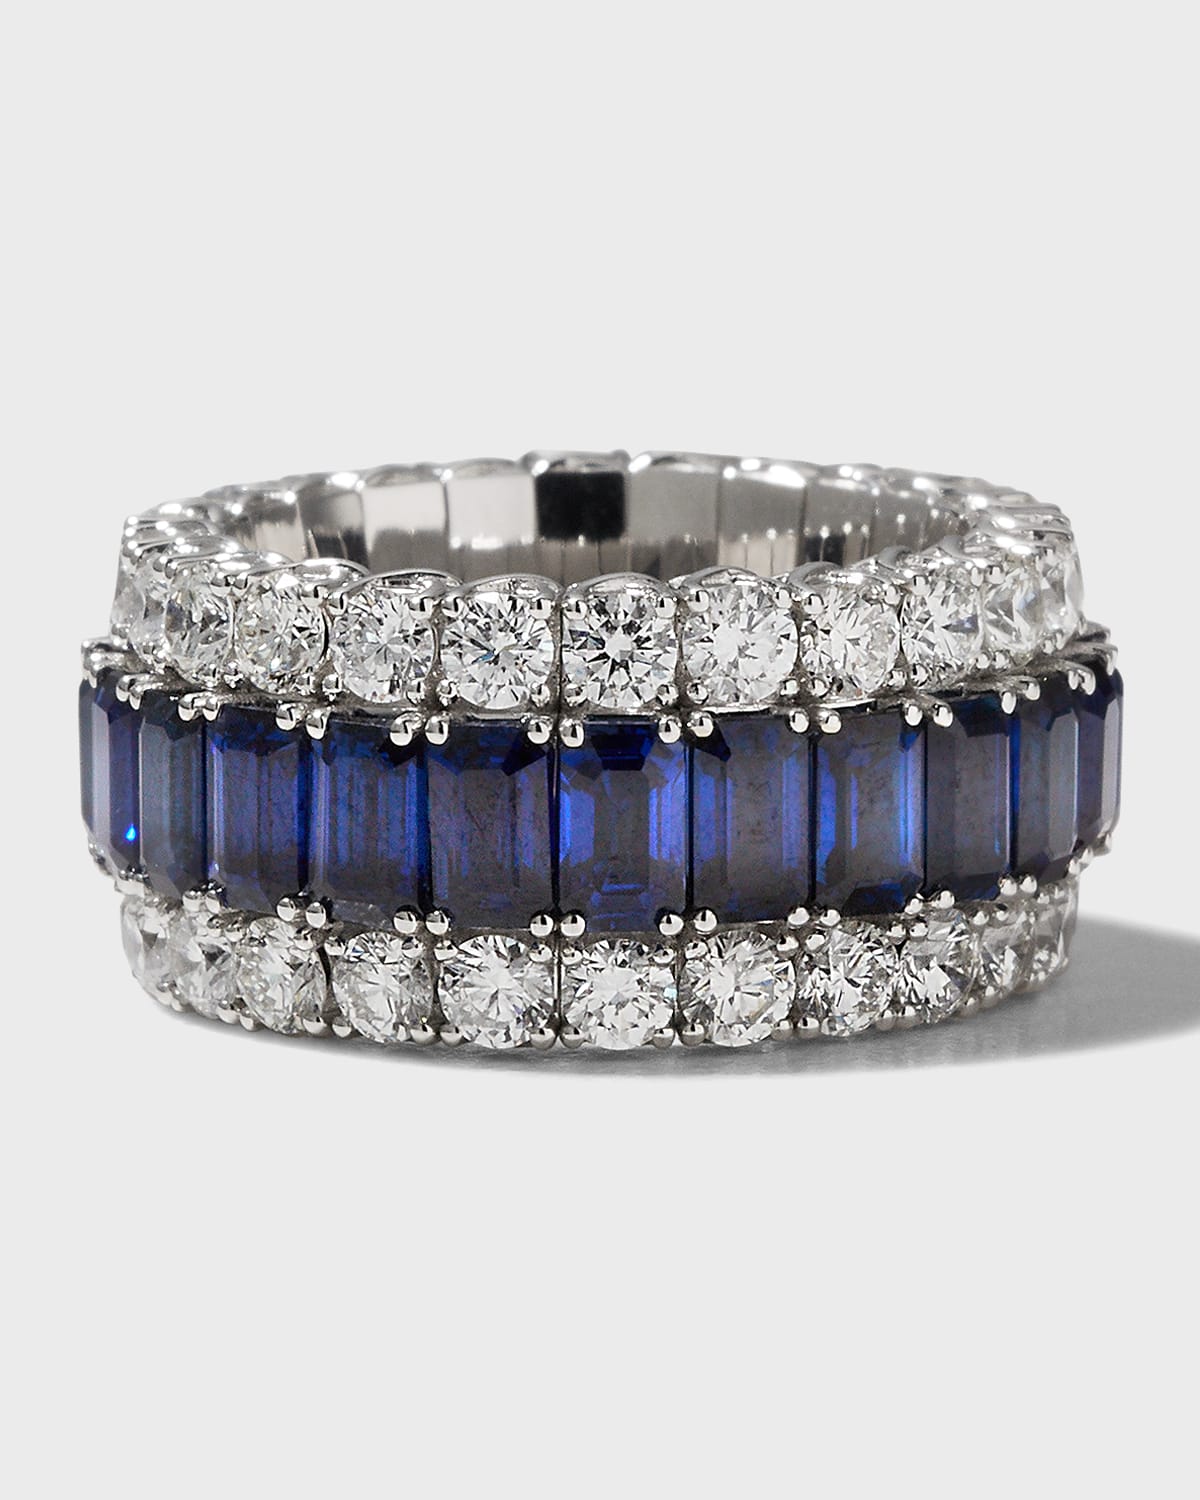 Xpandable 18k White Gold Diamond and Blue Sapphire Ring, Size 6.25 - 9.50